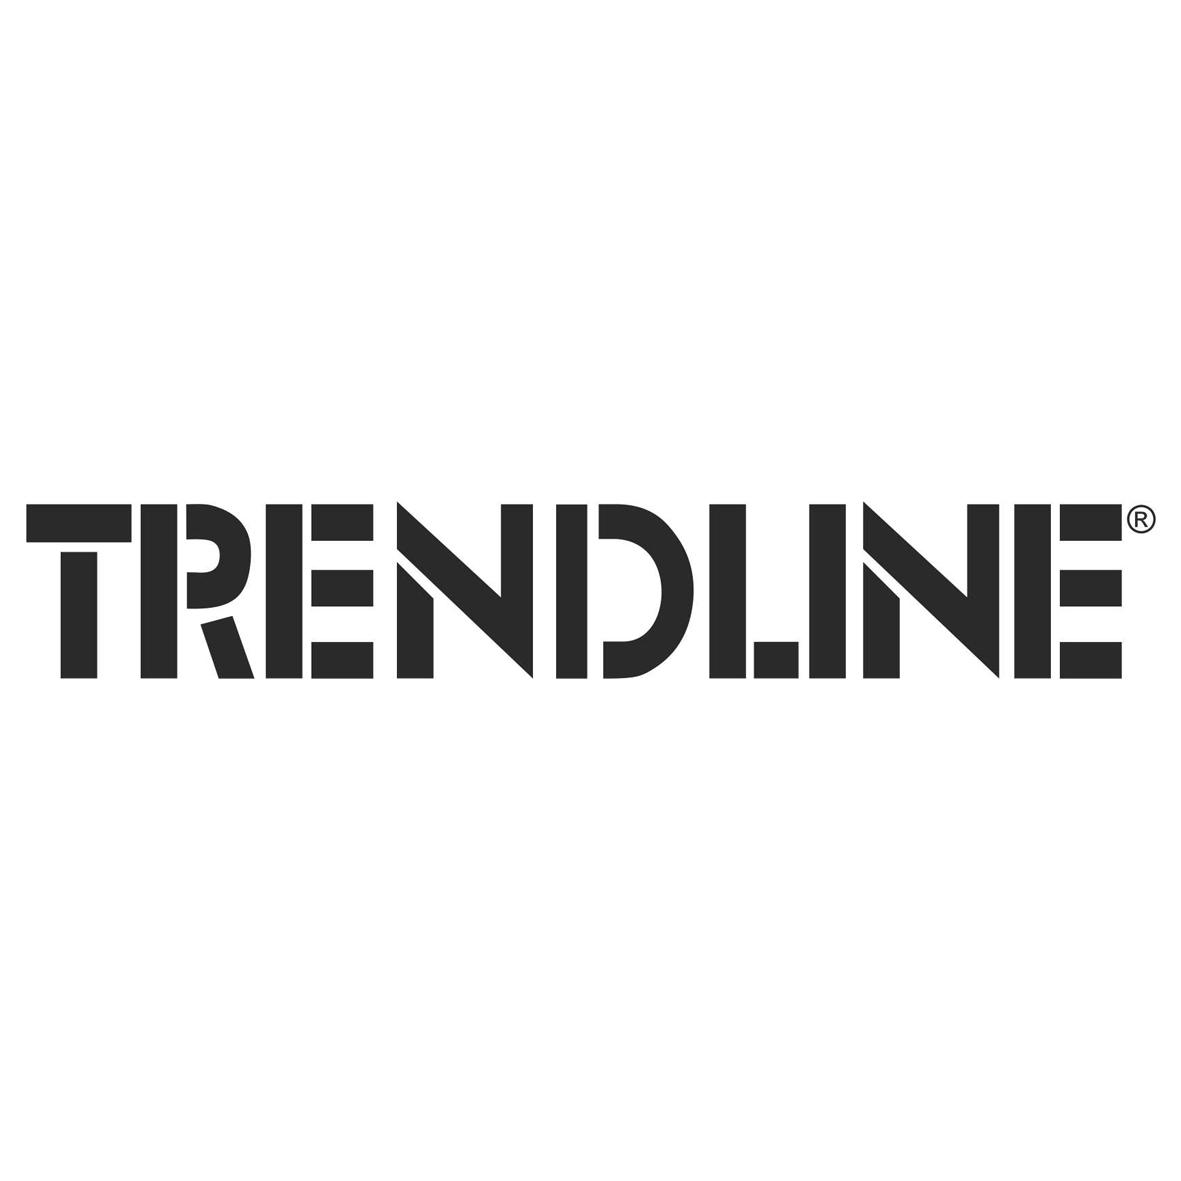 Trendline